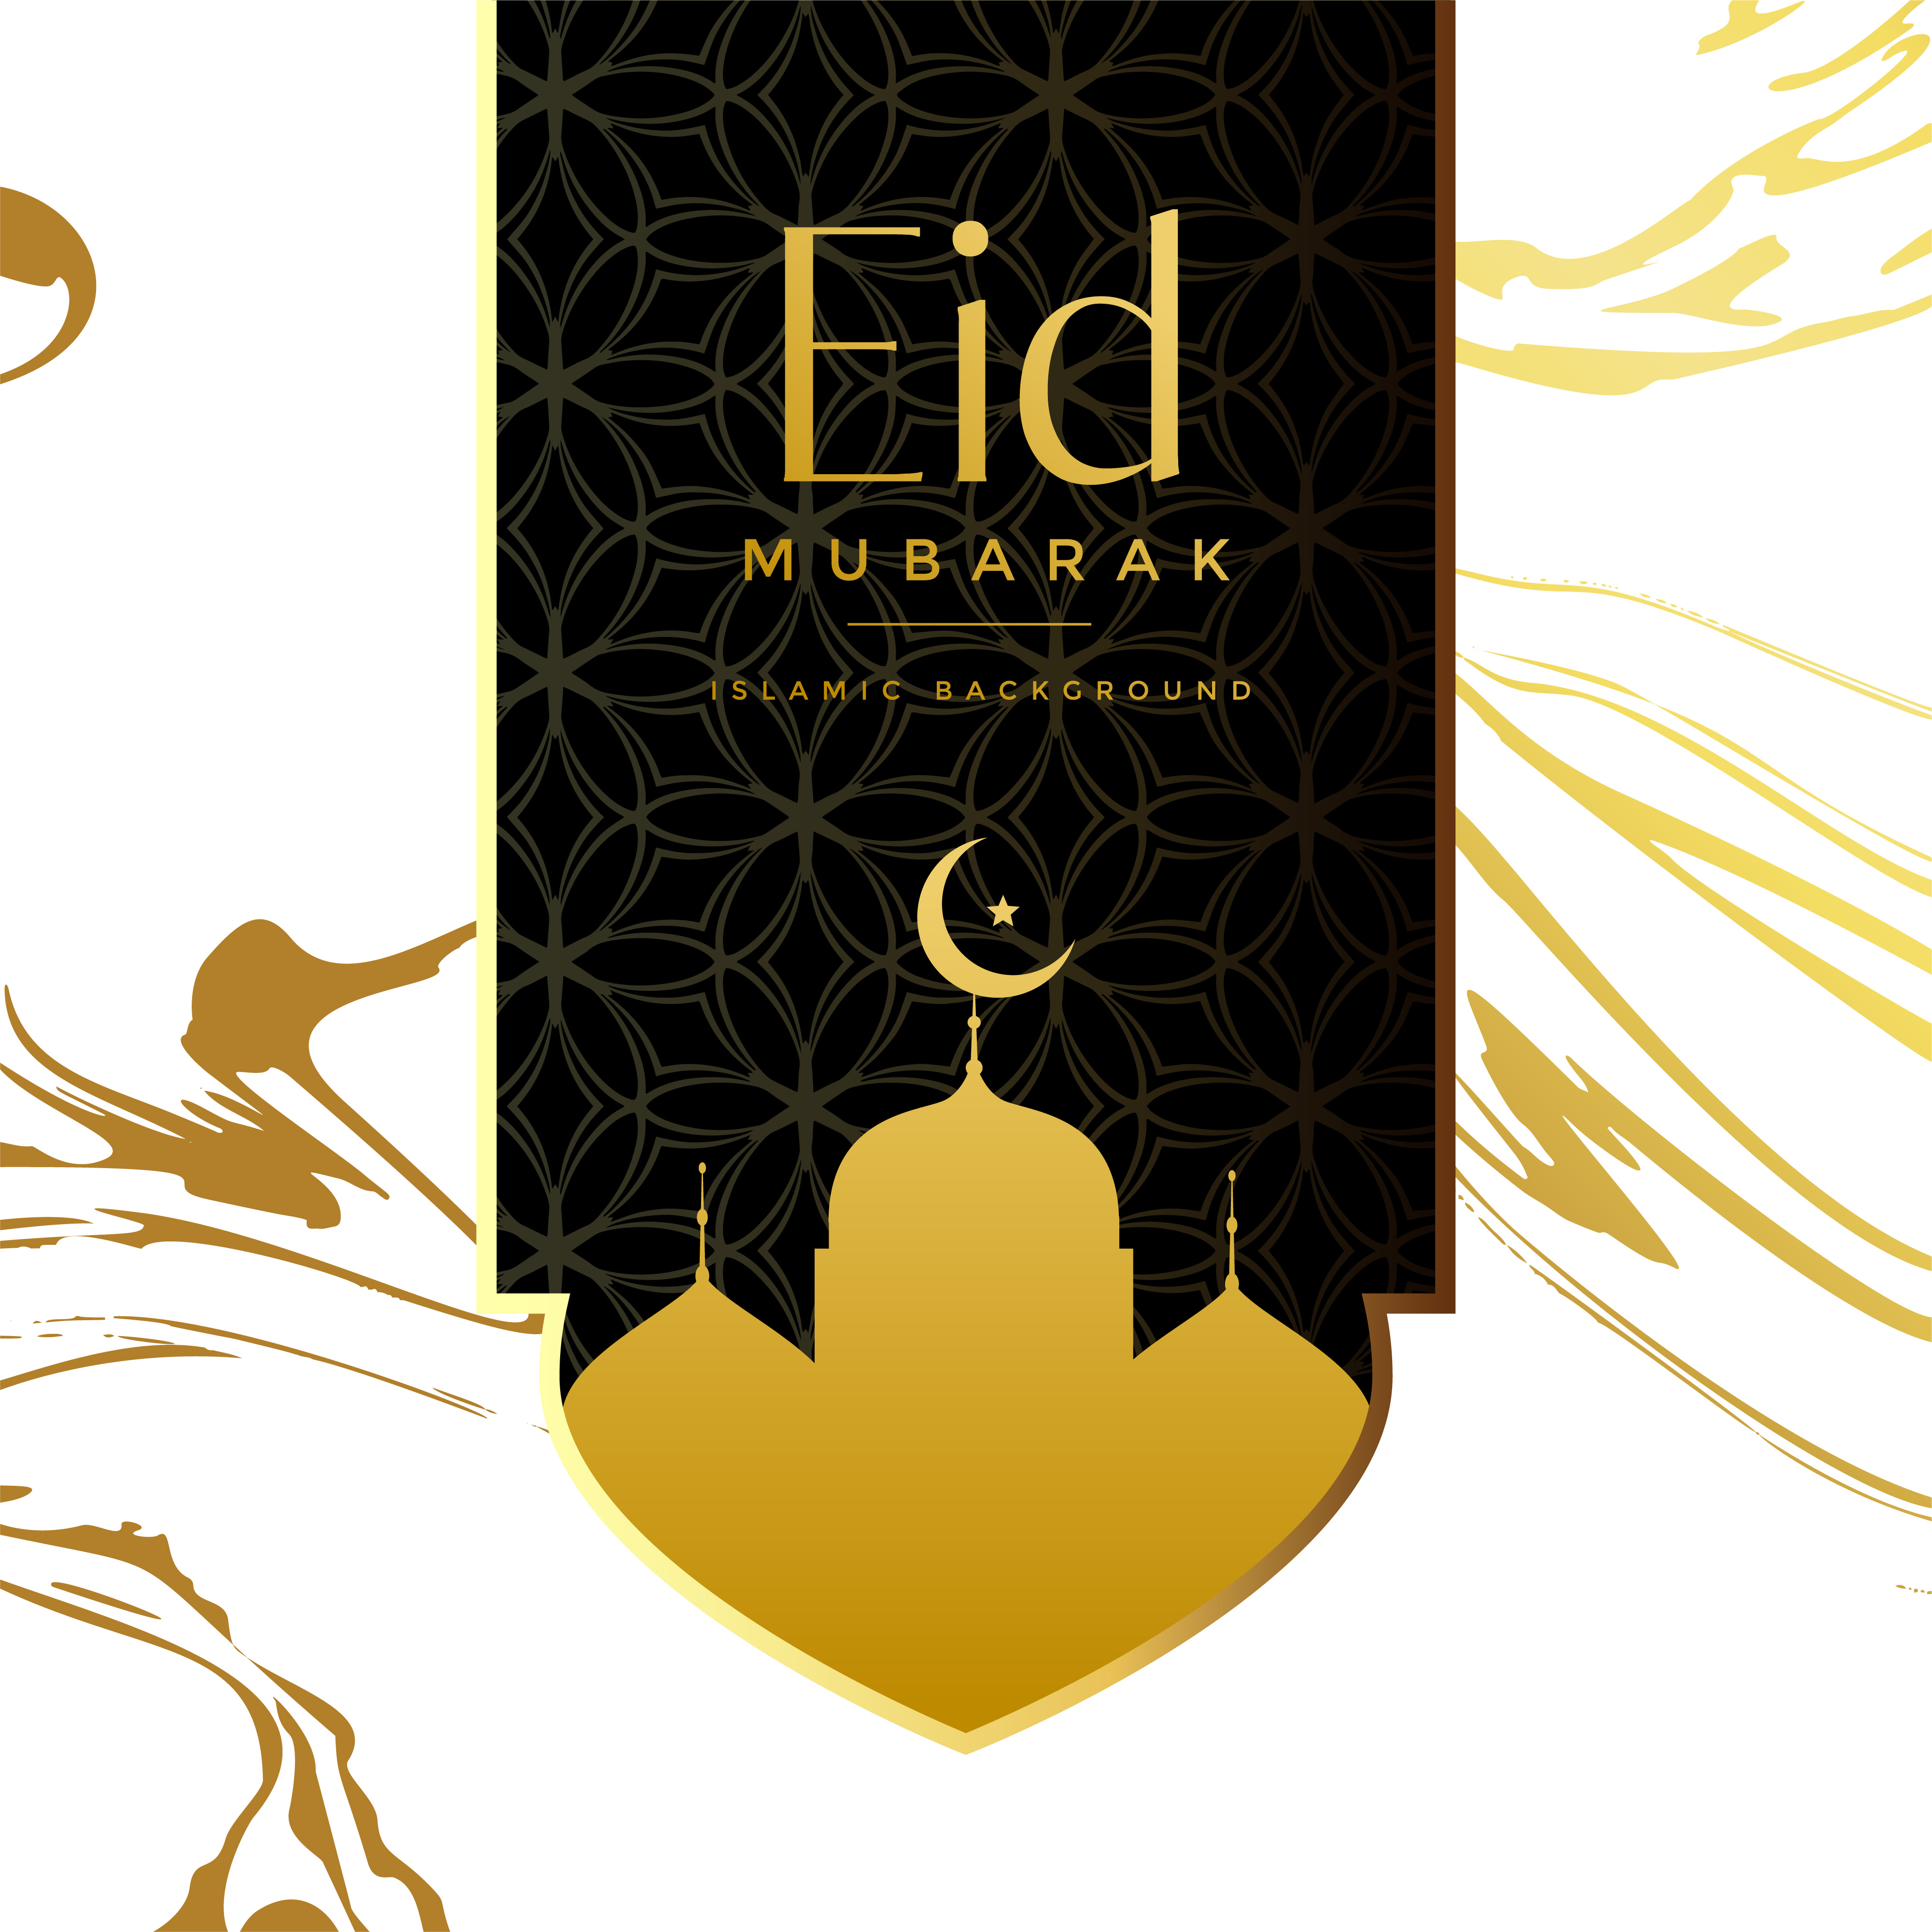 Eid mubarak creative greeting background design - Download 